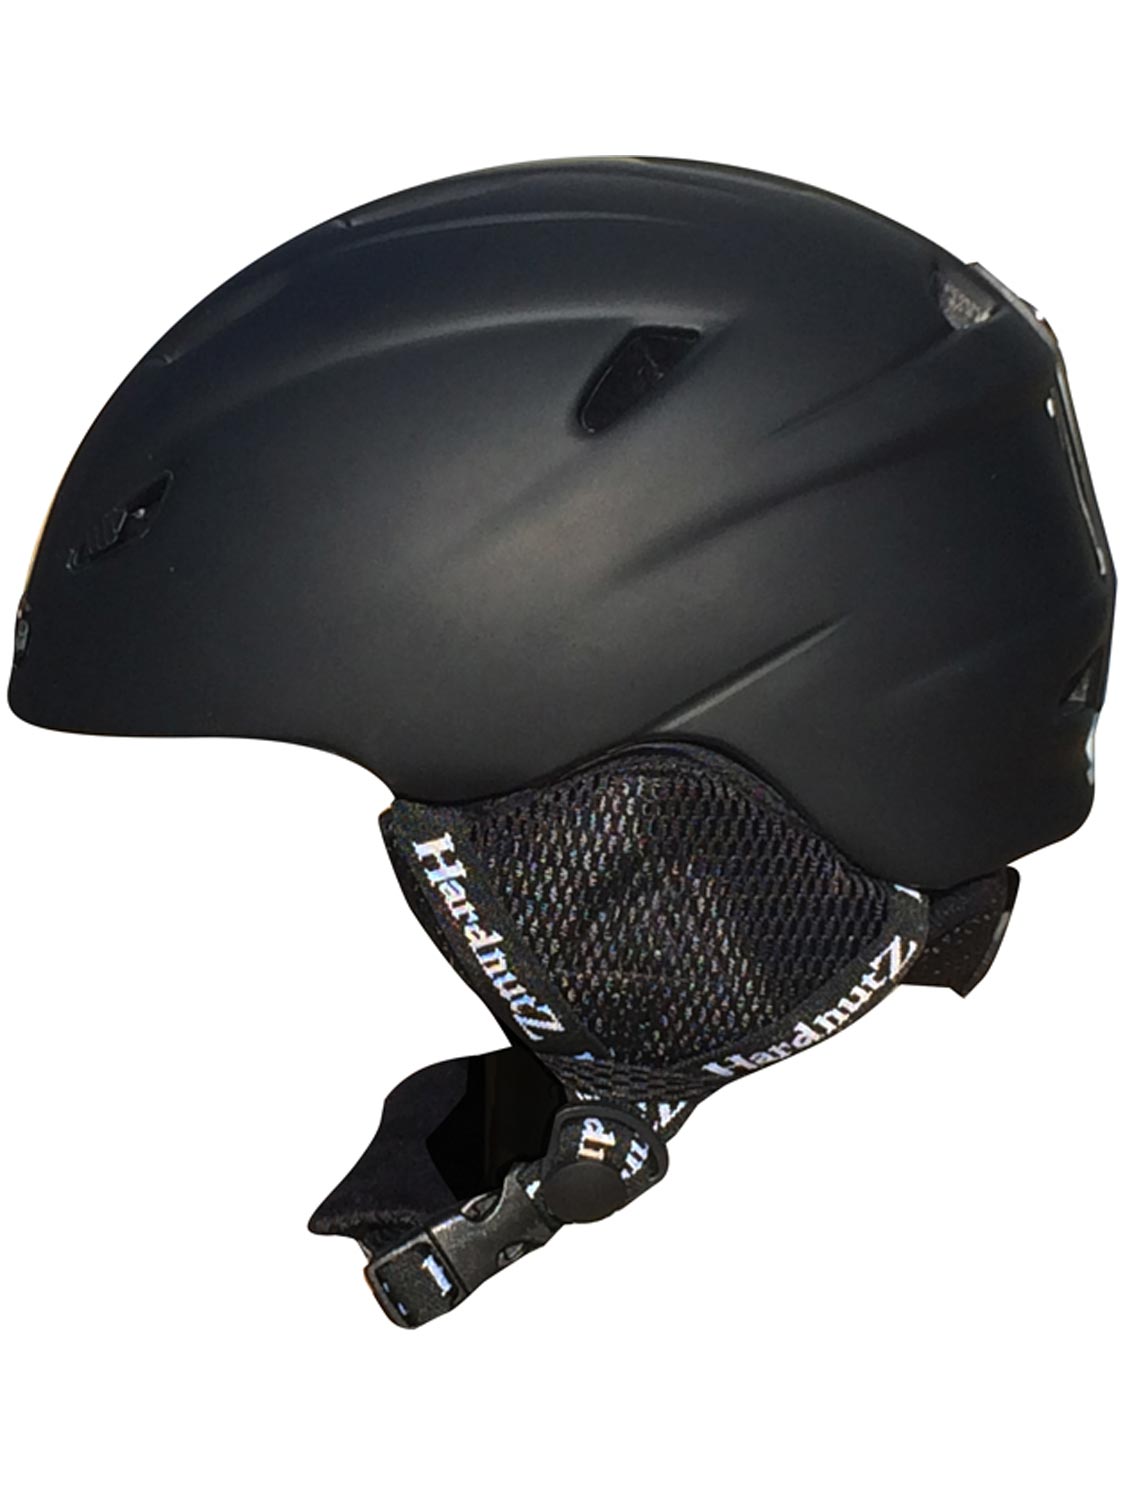 Hardnutz Ski Helmet Black Grey Carbon Adult Snowboard HN101 Mens Ladies Kids New 